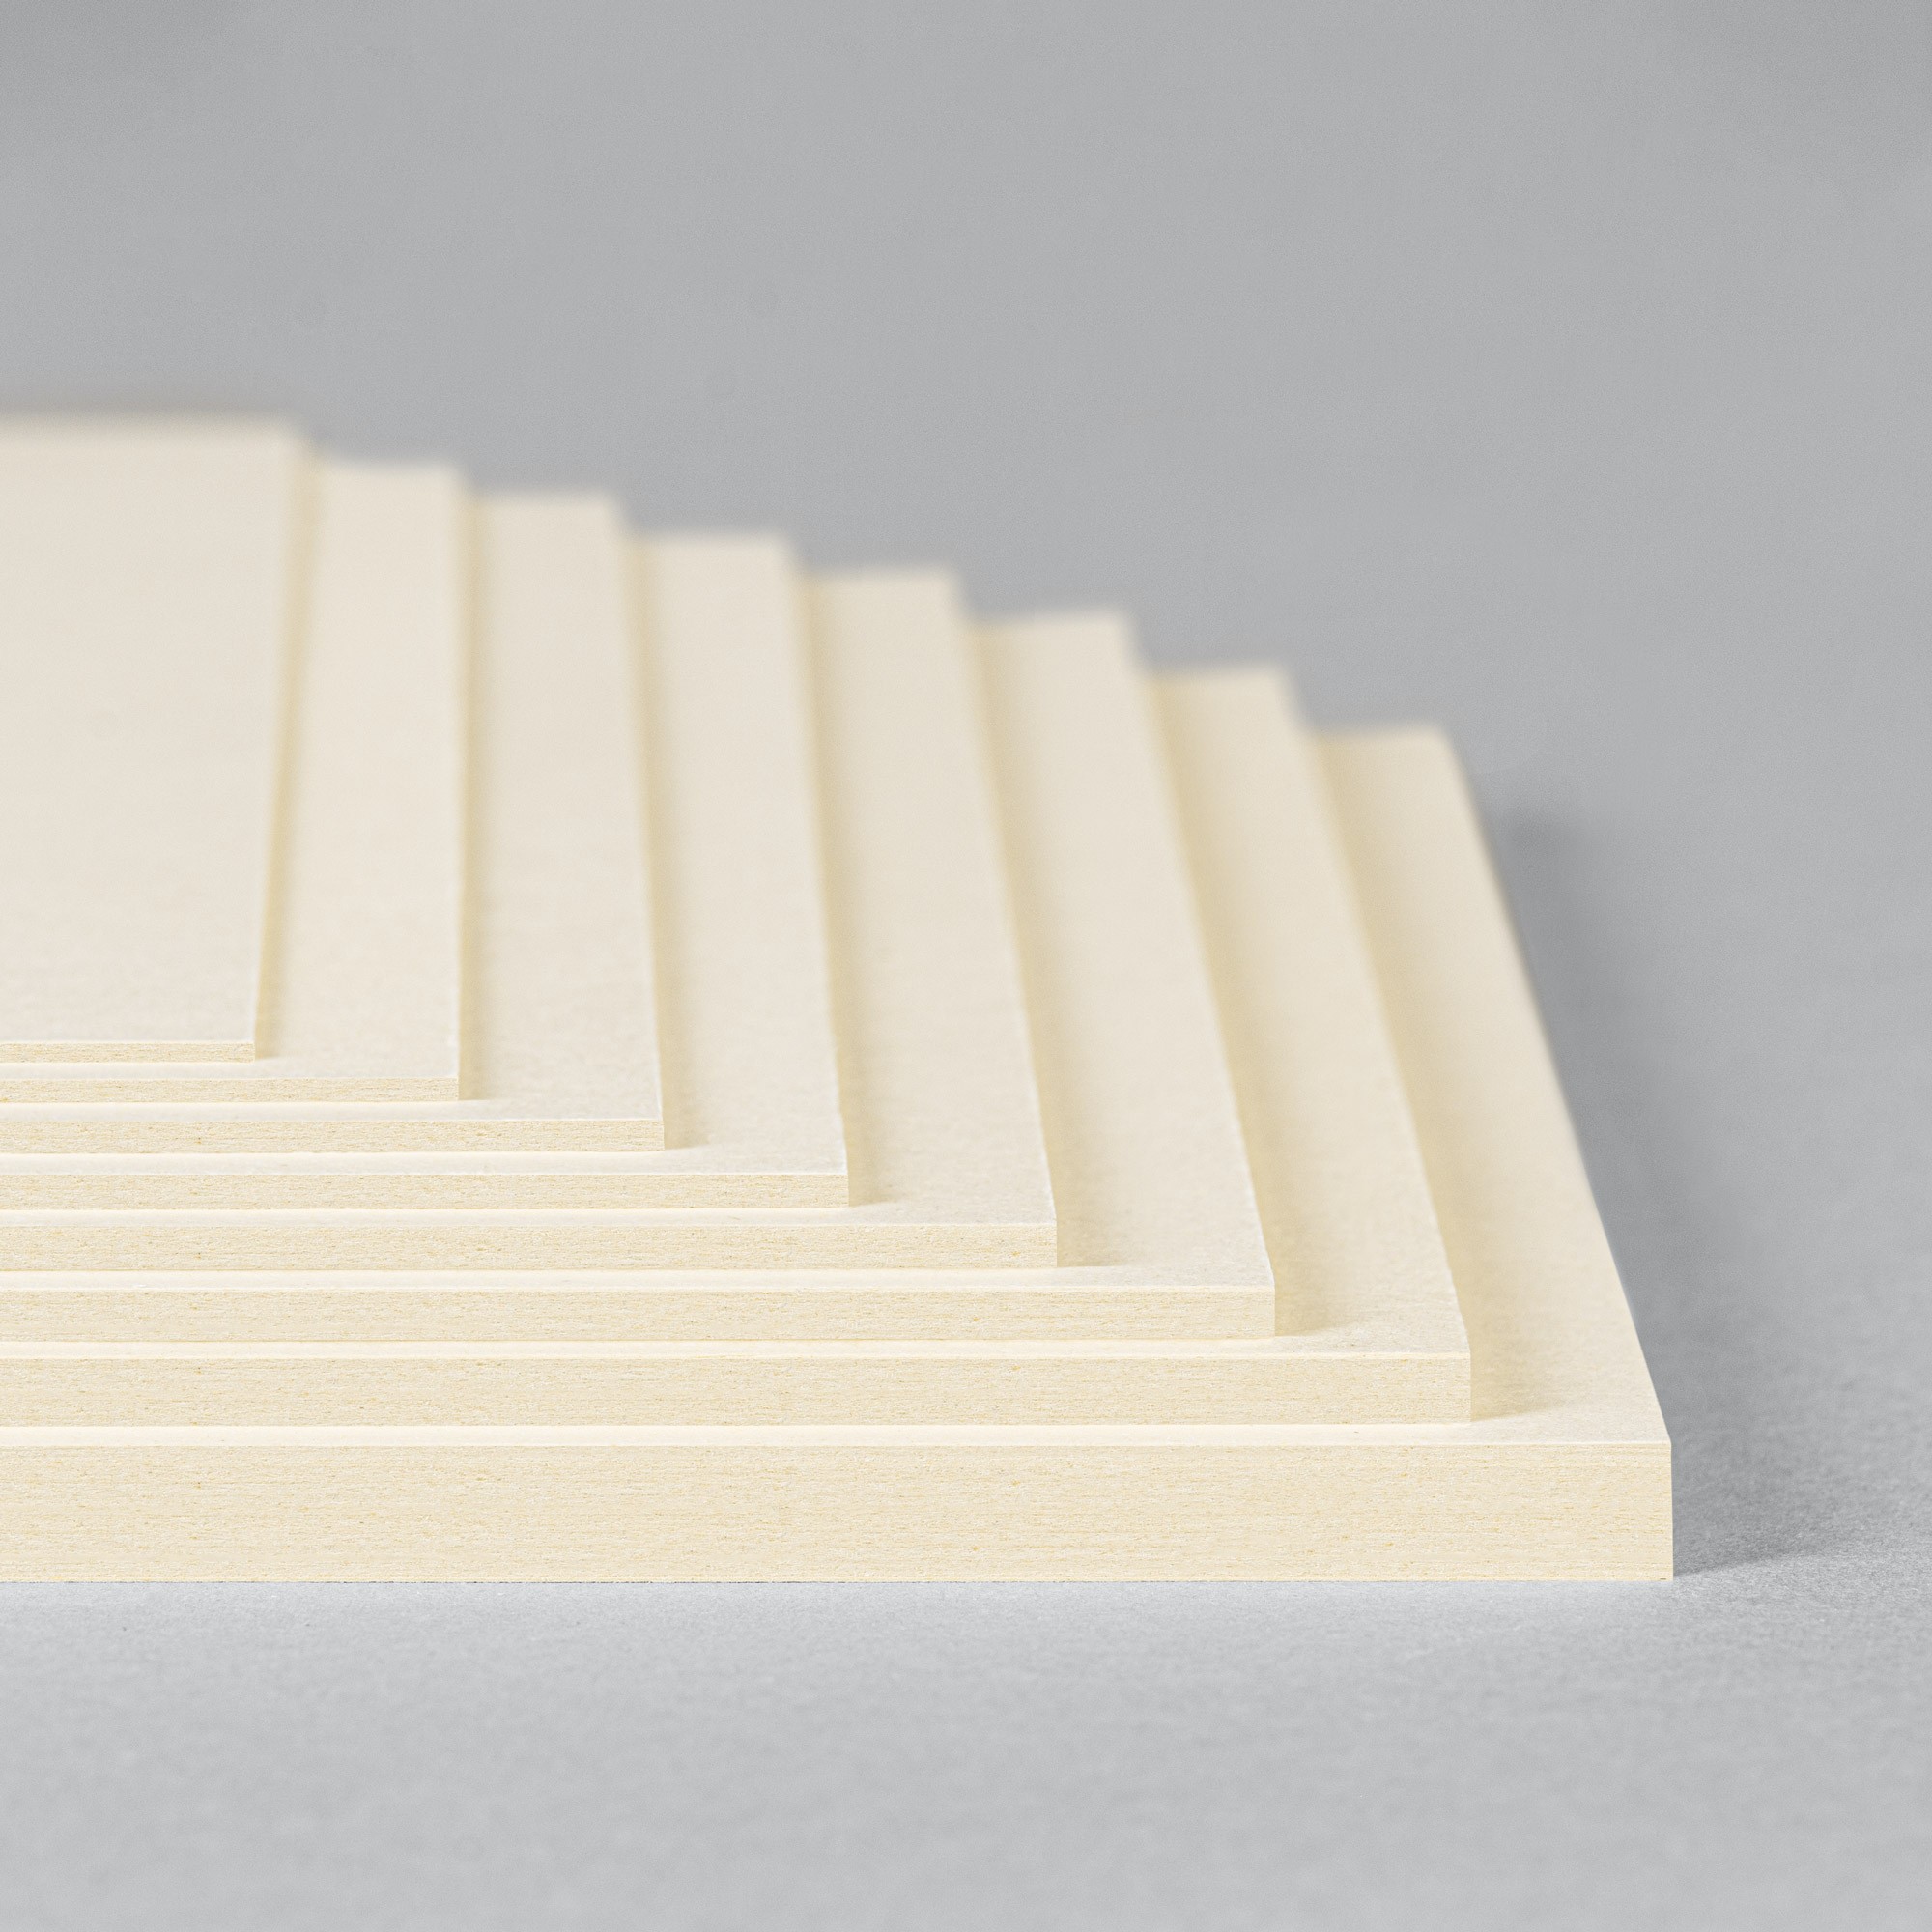 Eka wood board (Finn board) in various thicknesses